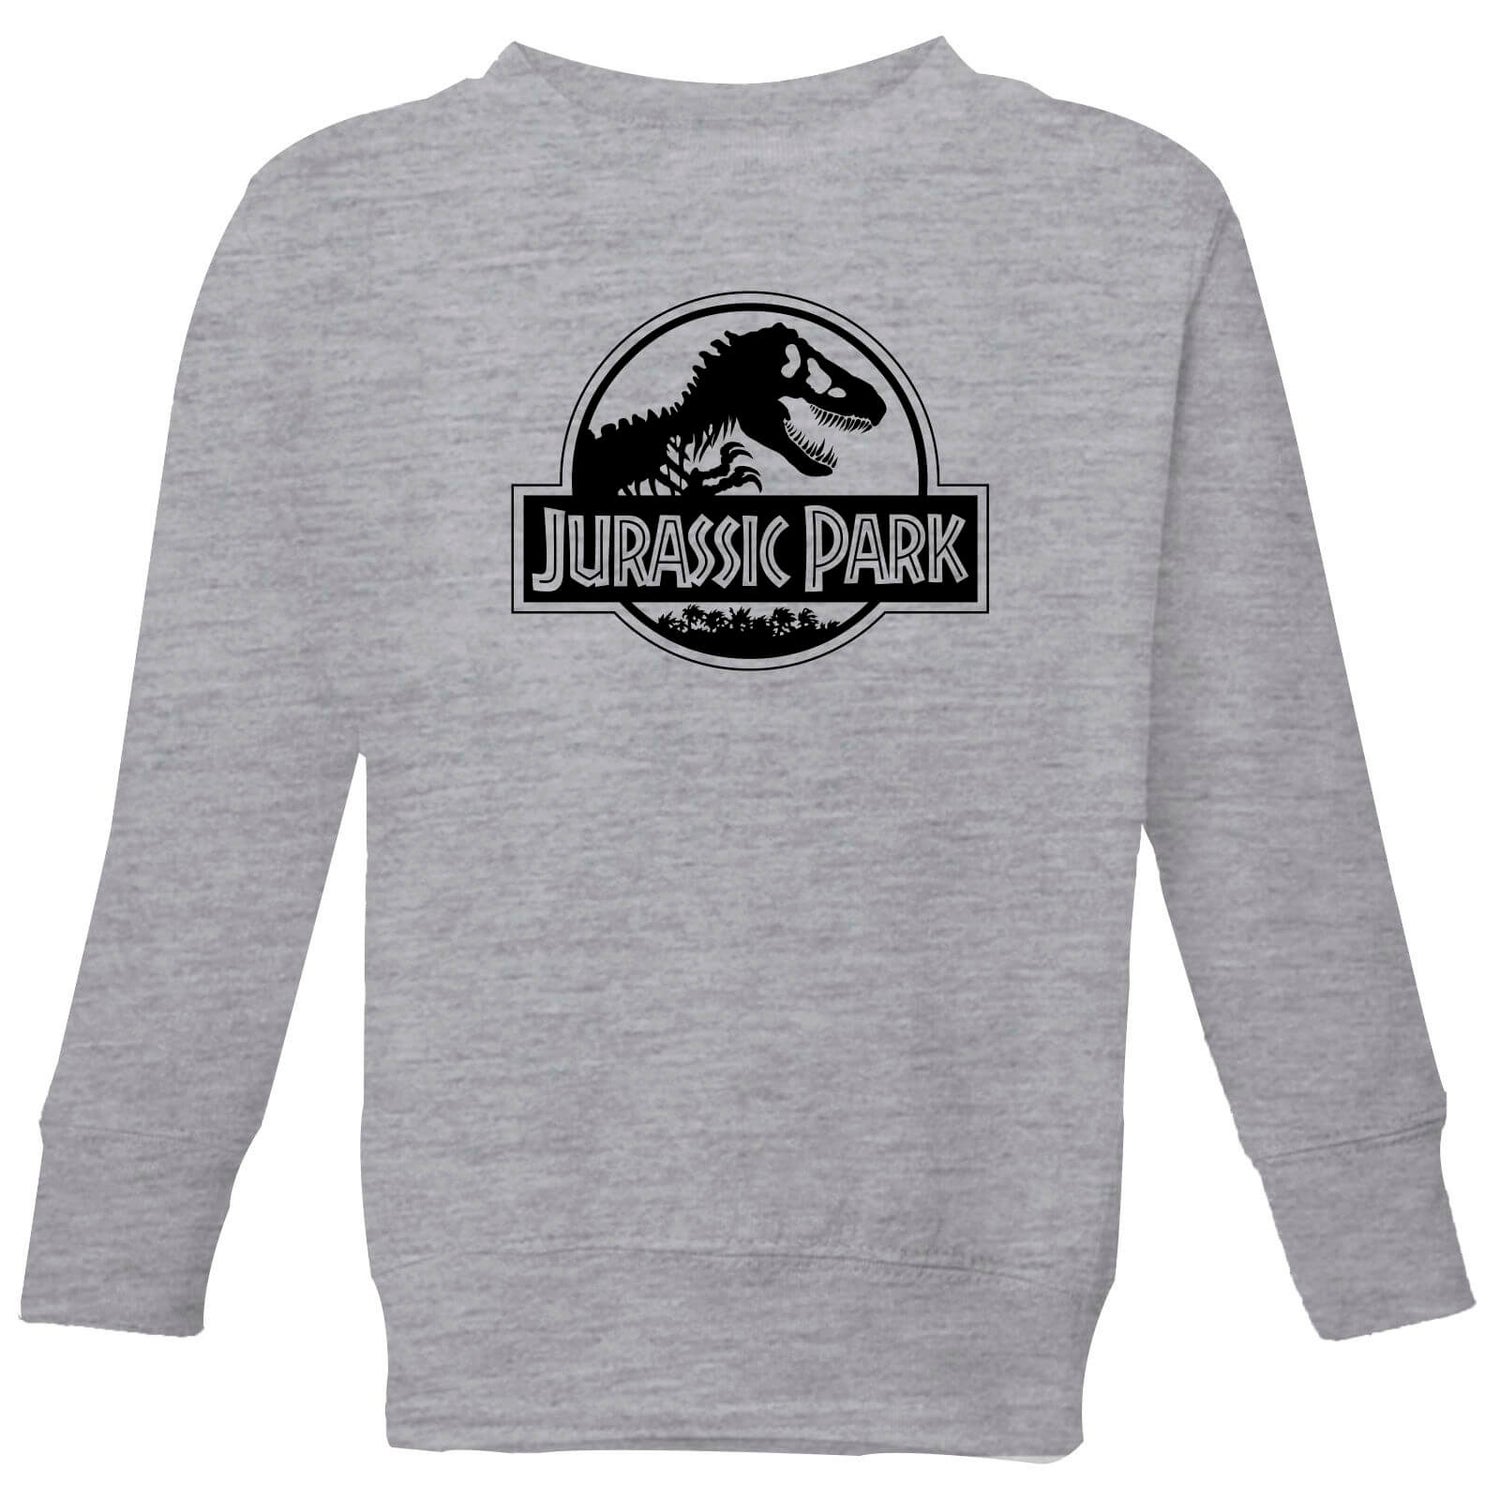 Jurassic Park Logo Kids' Sweatshirt - Grey